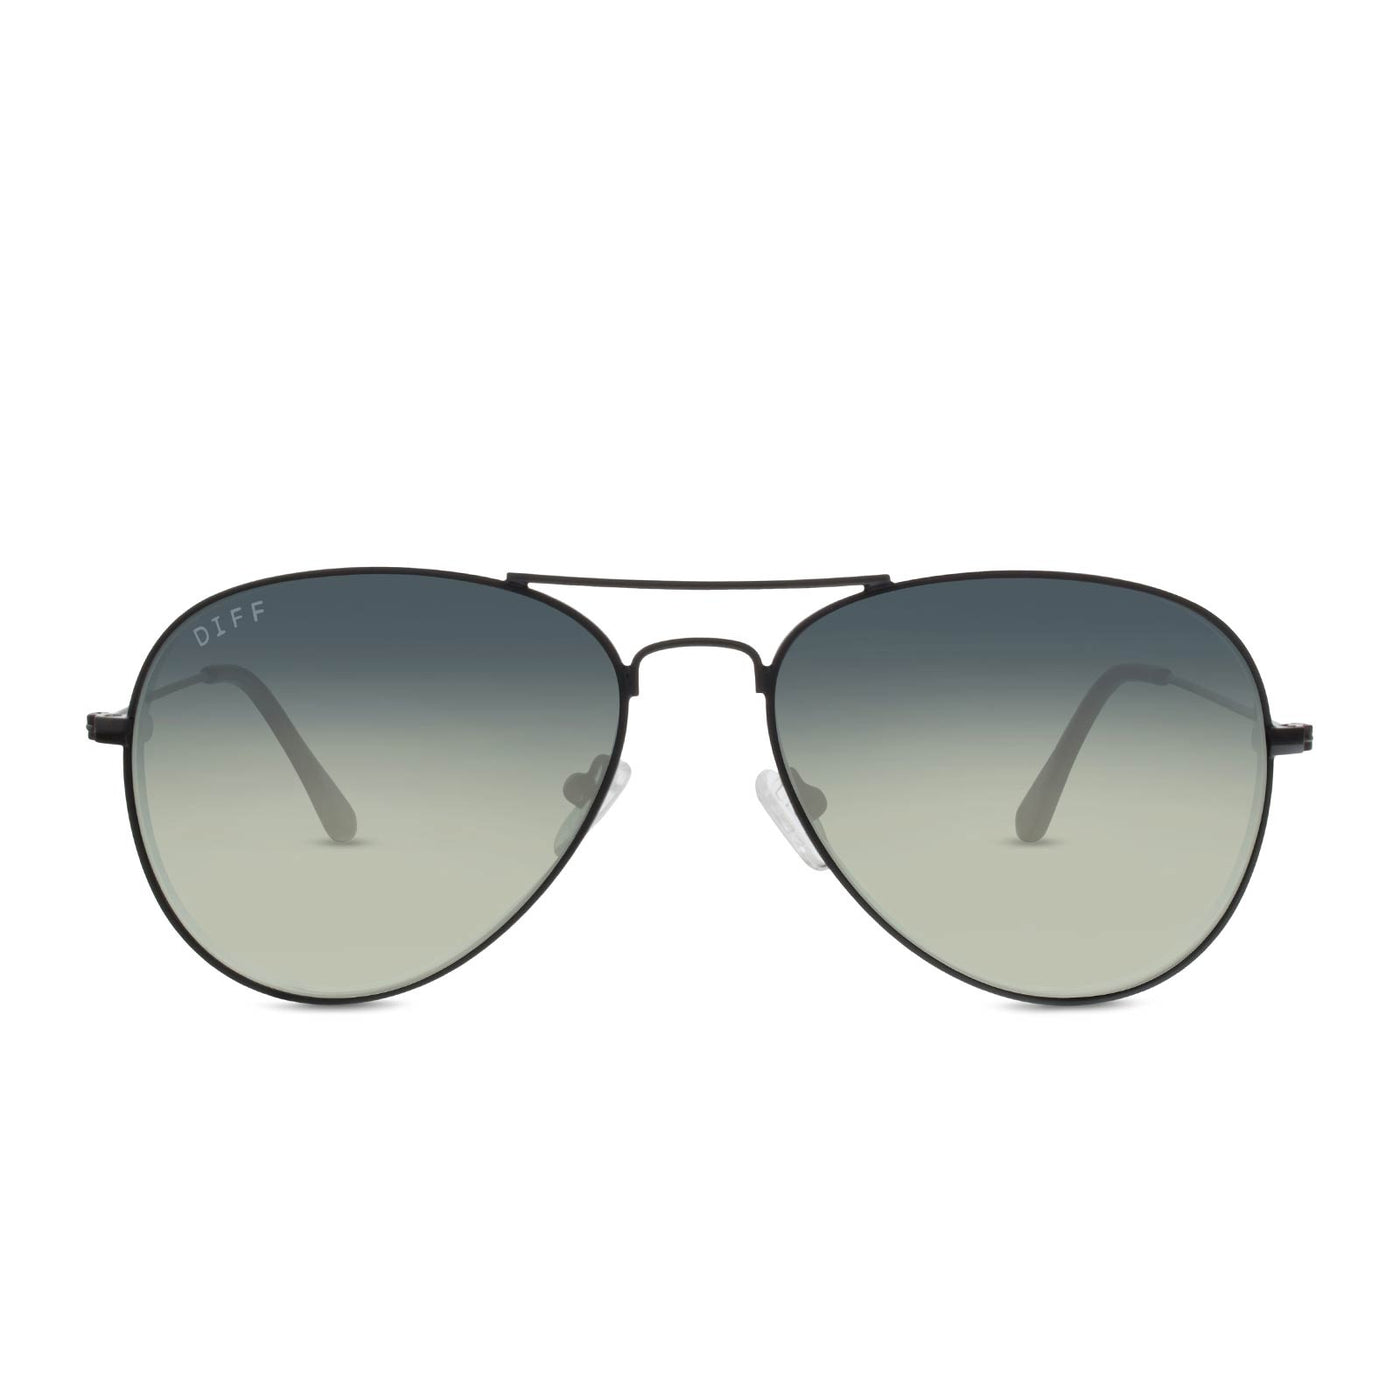 DIFF Cruz | Black + Grey Gradient Lens Sunglasses